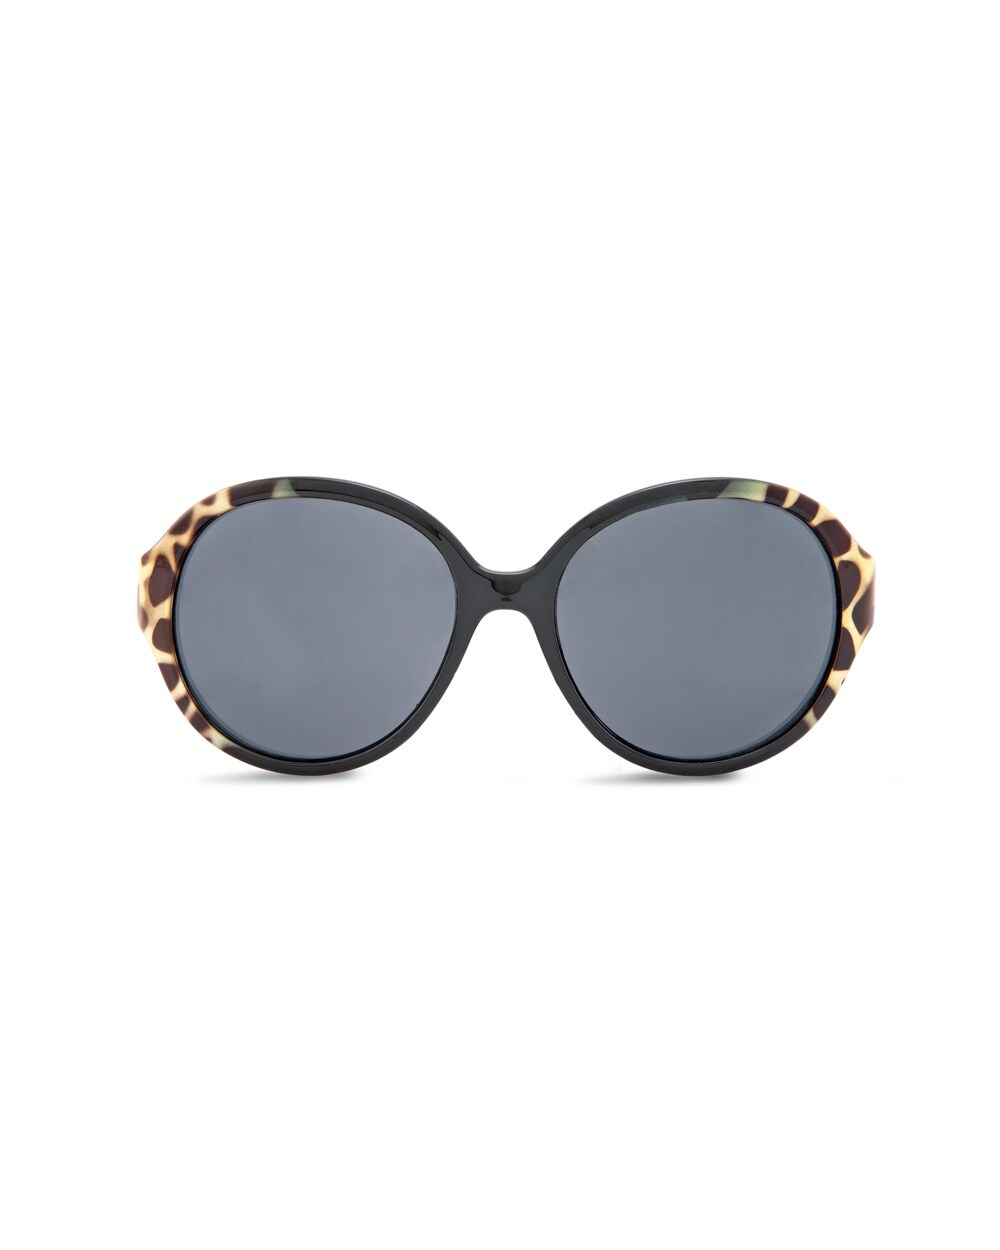 Tawny Leopard Black Sunglasses